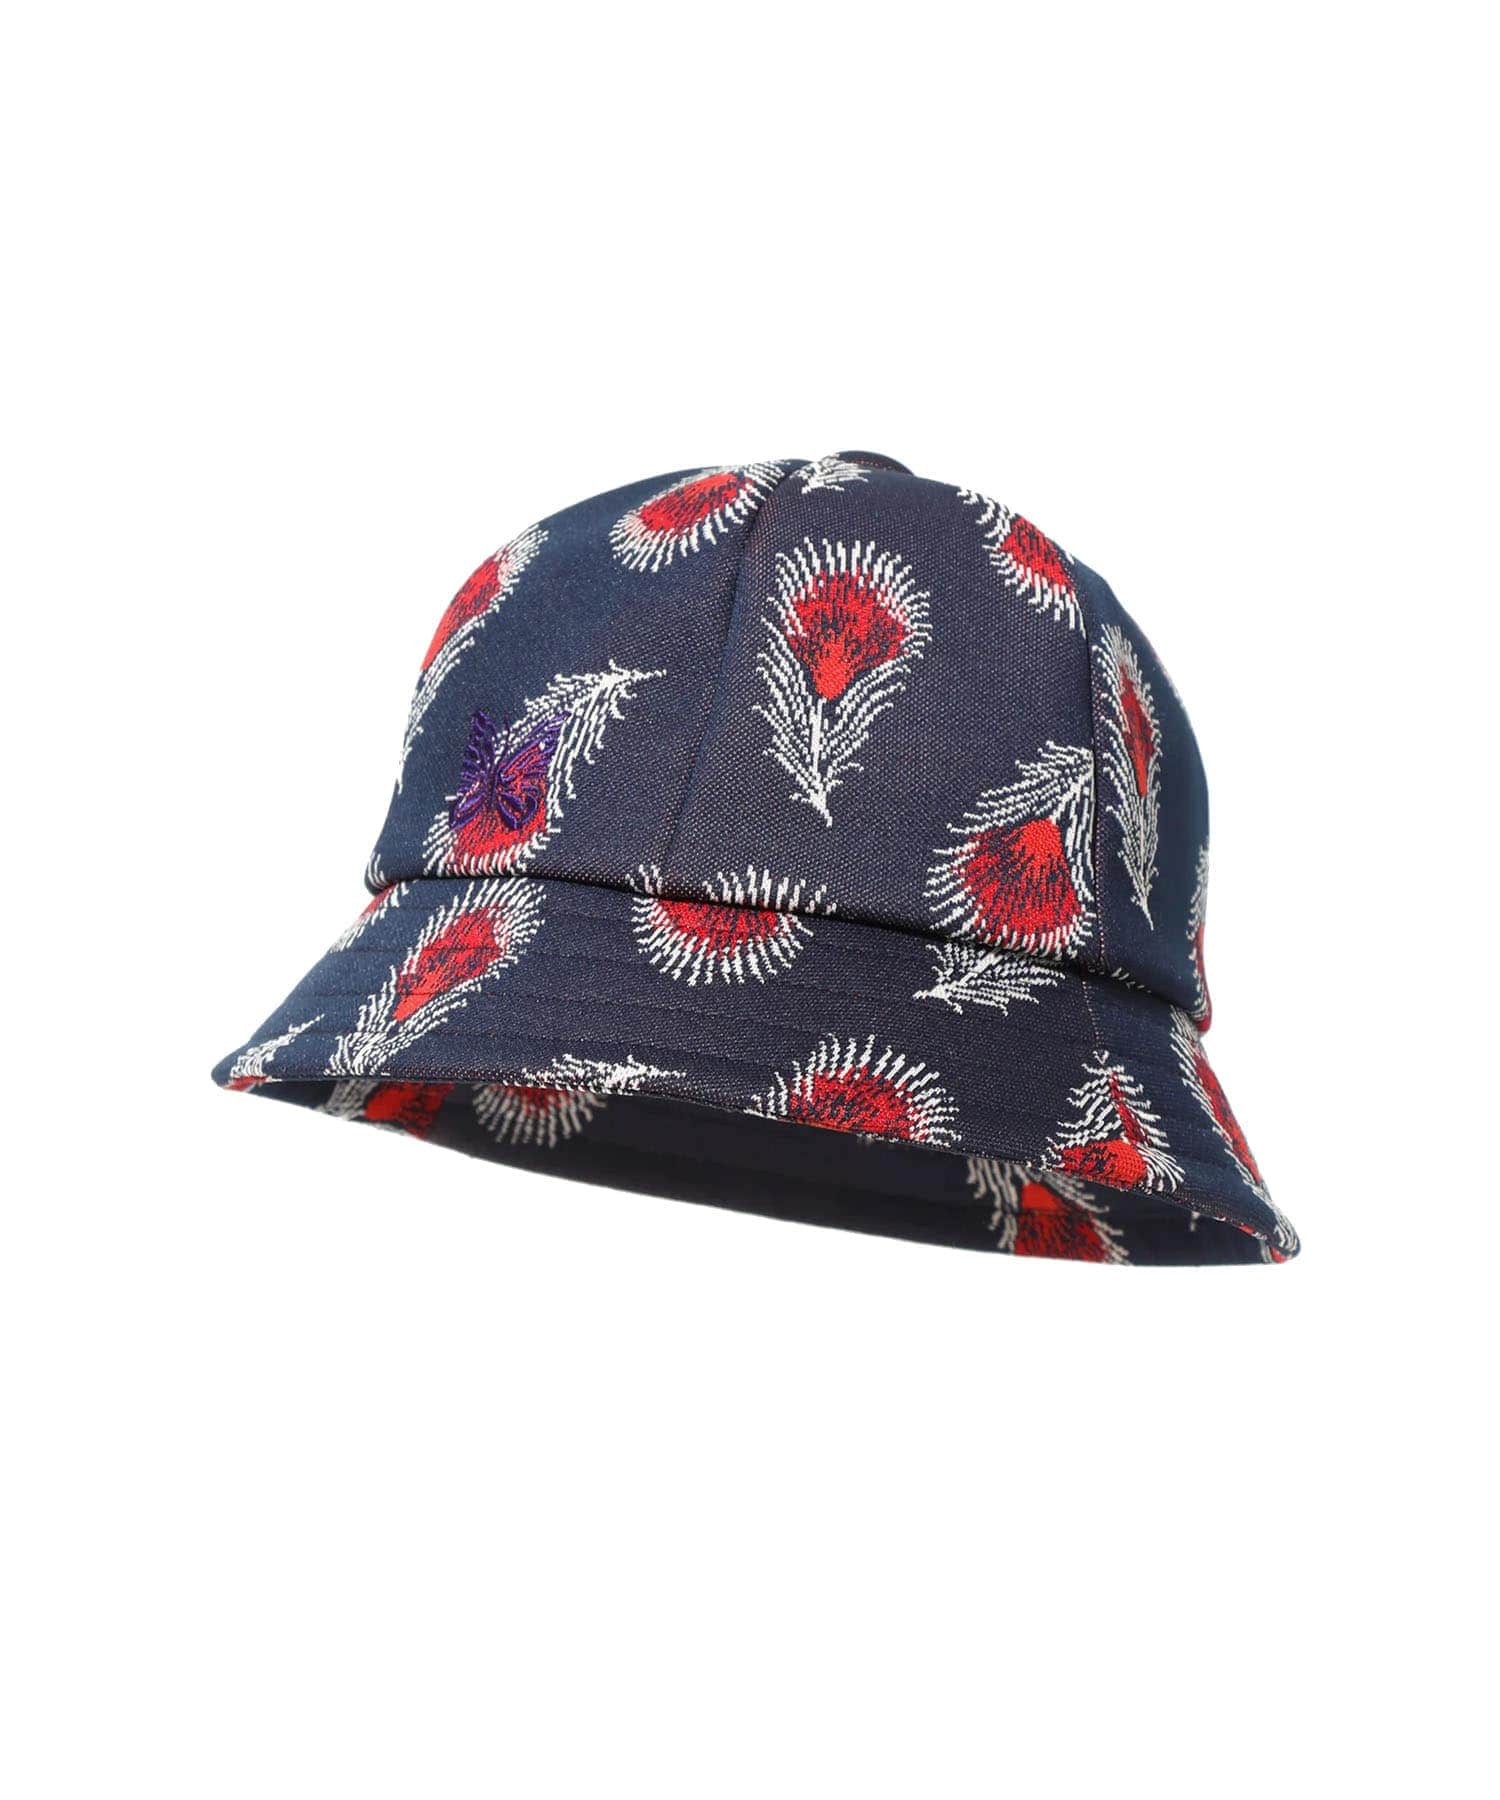 Bermuda Hat - Poly Jq NEEDLES